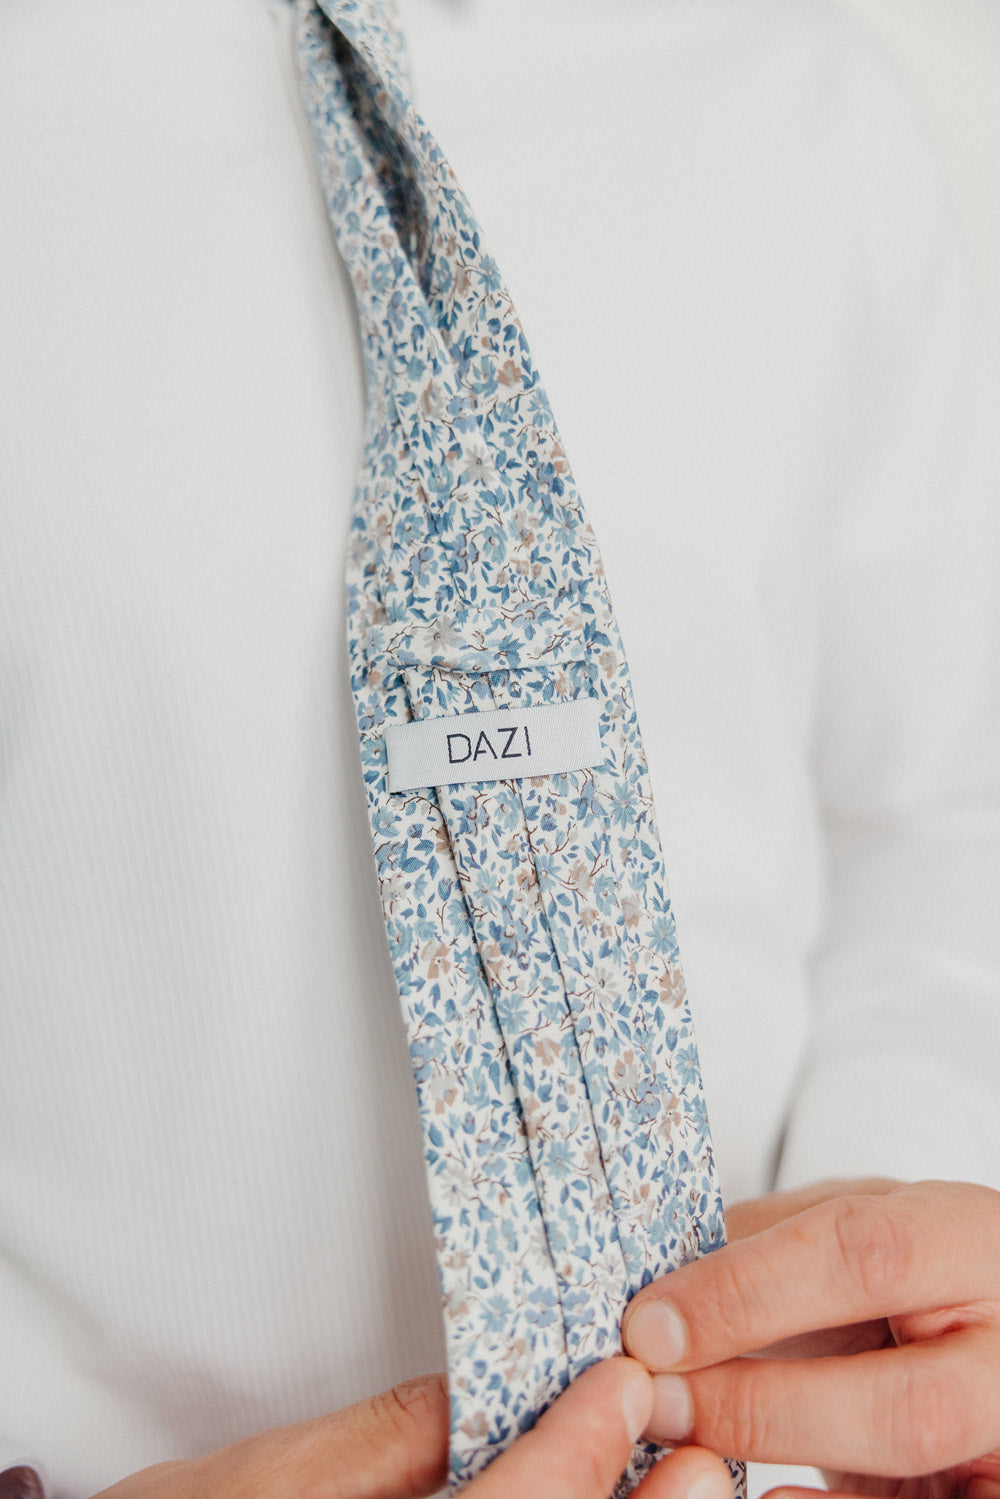 Scorpion Grass tie worn with a white shirt.